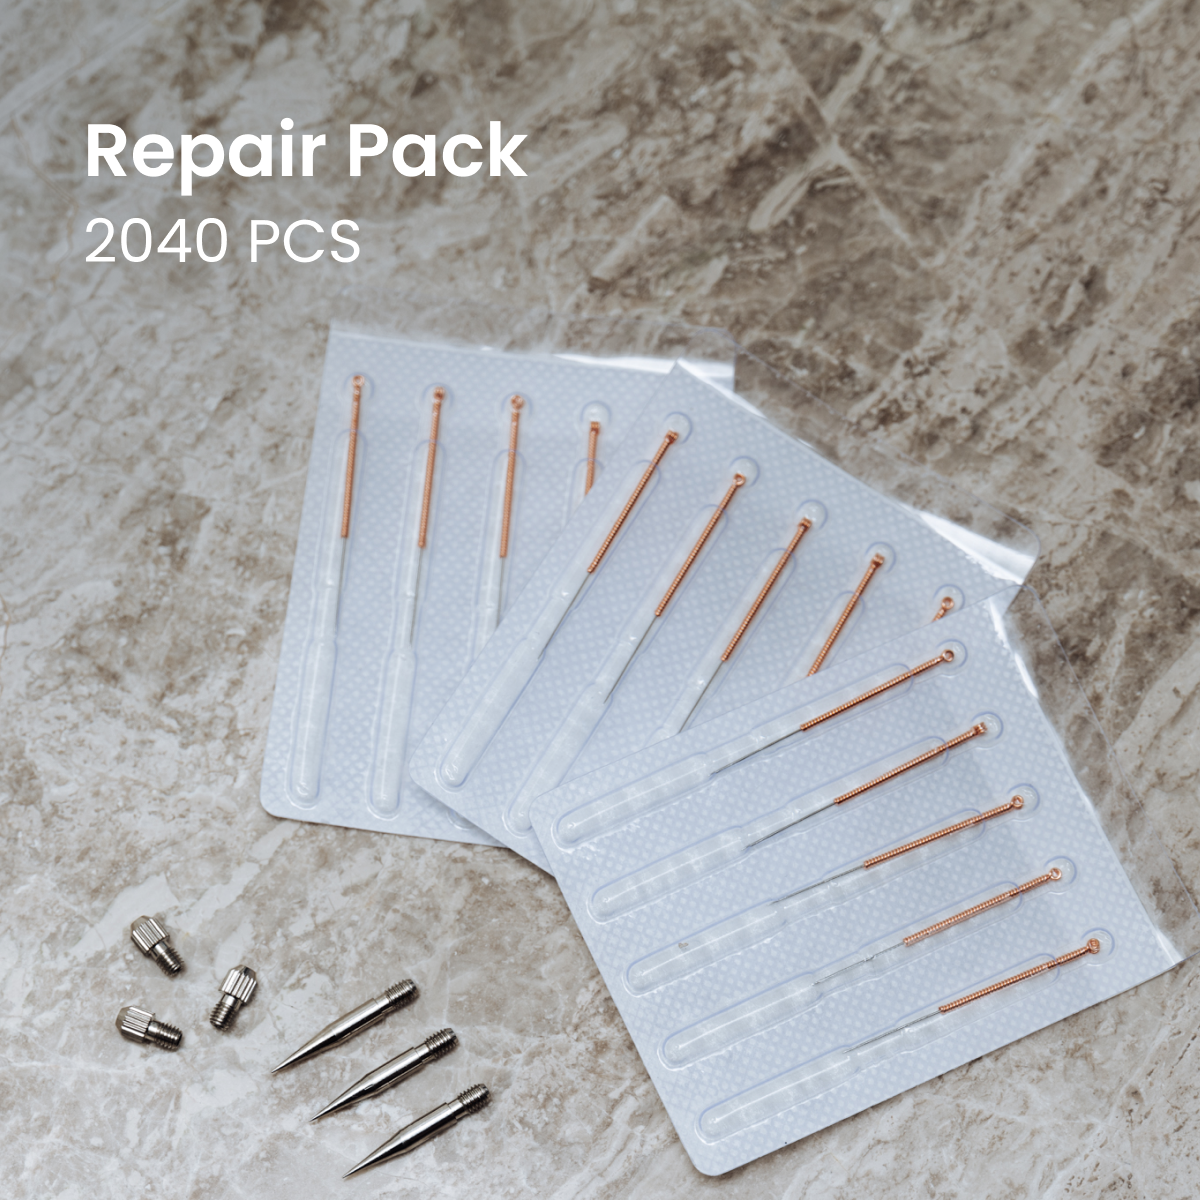 Bundle-Angebot: Ultimate Beauty Spa Kit (25x) + Reparaturpaket (2040 Stück) + kostenloses Ratgeberbuch